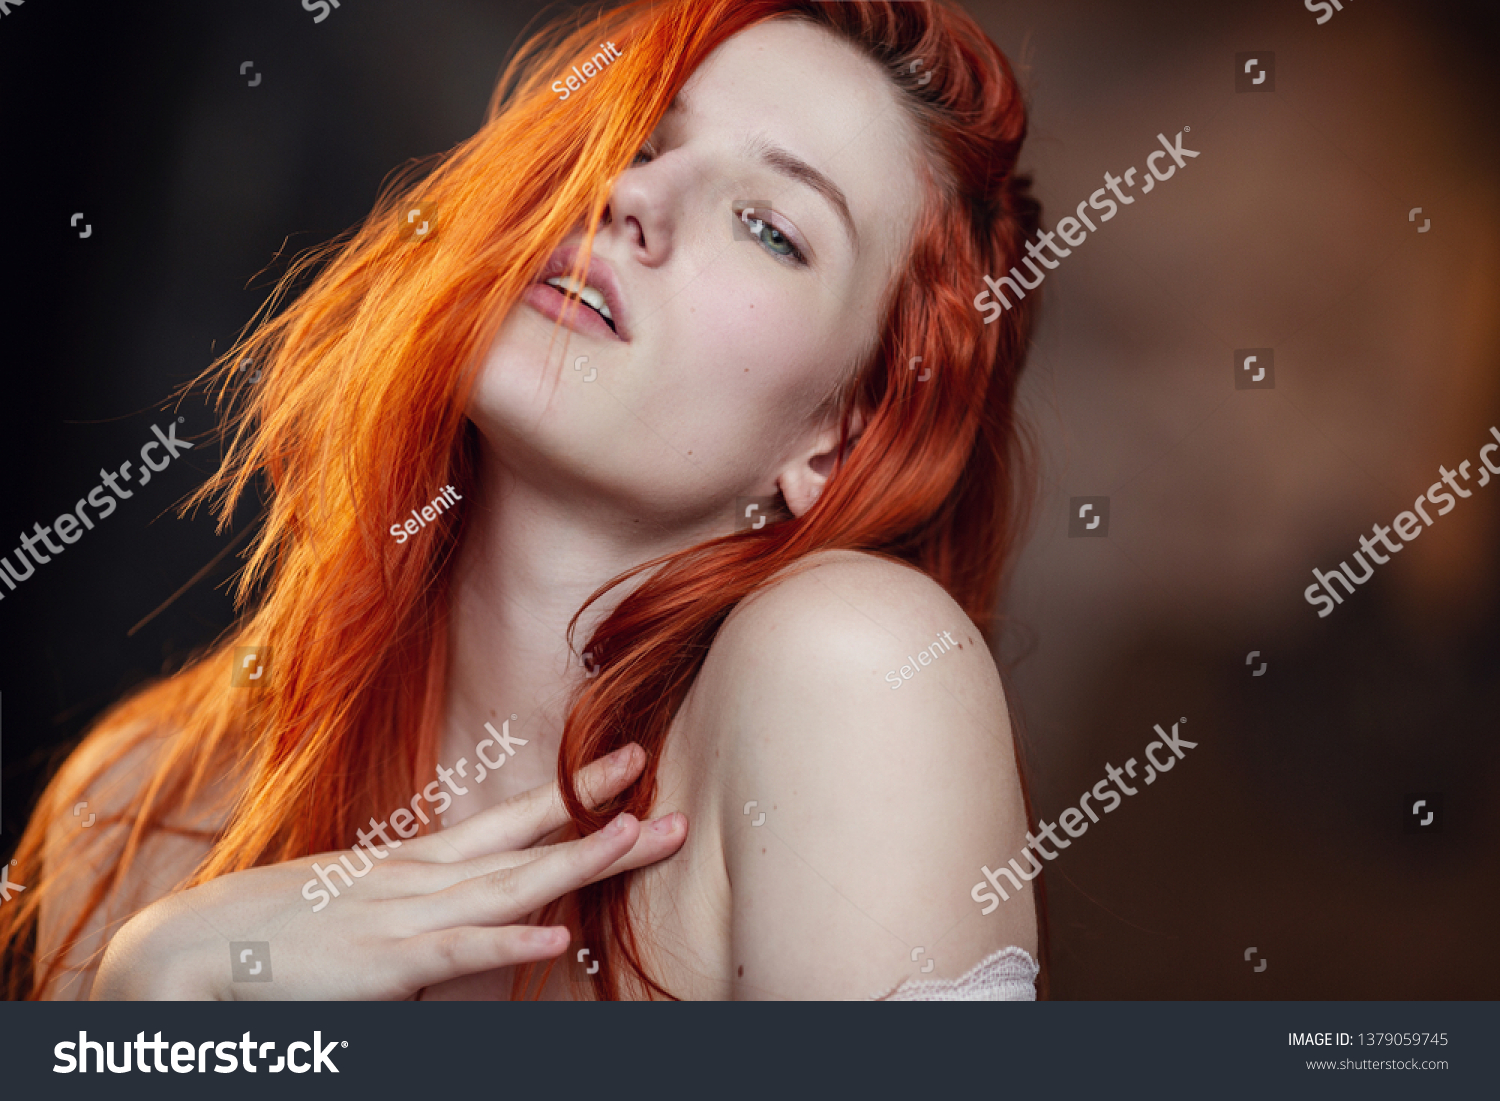 Hot Redhead Girl Pics